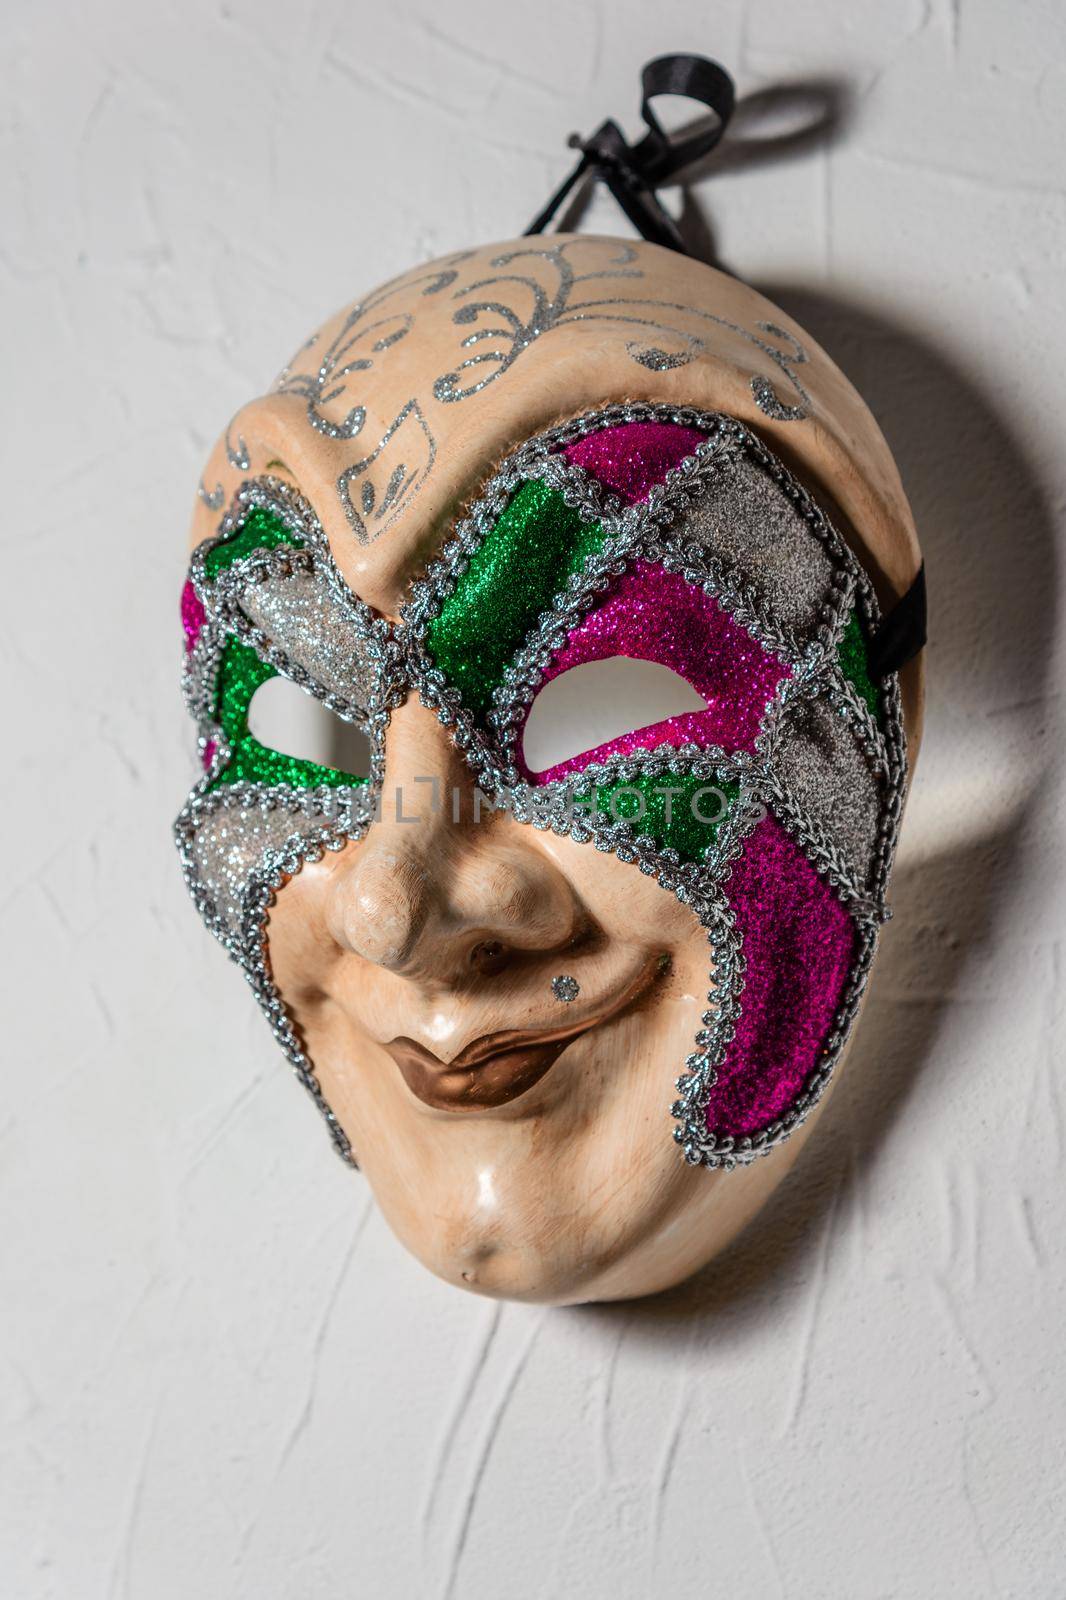 Sinister Joker mask by zartarn